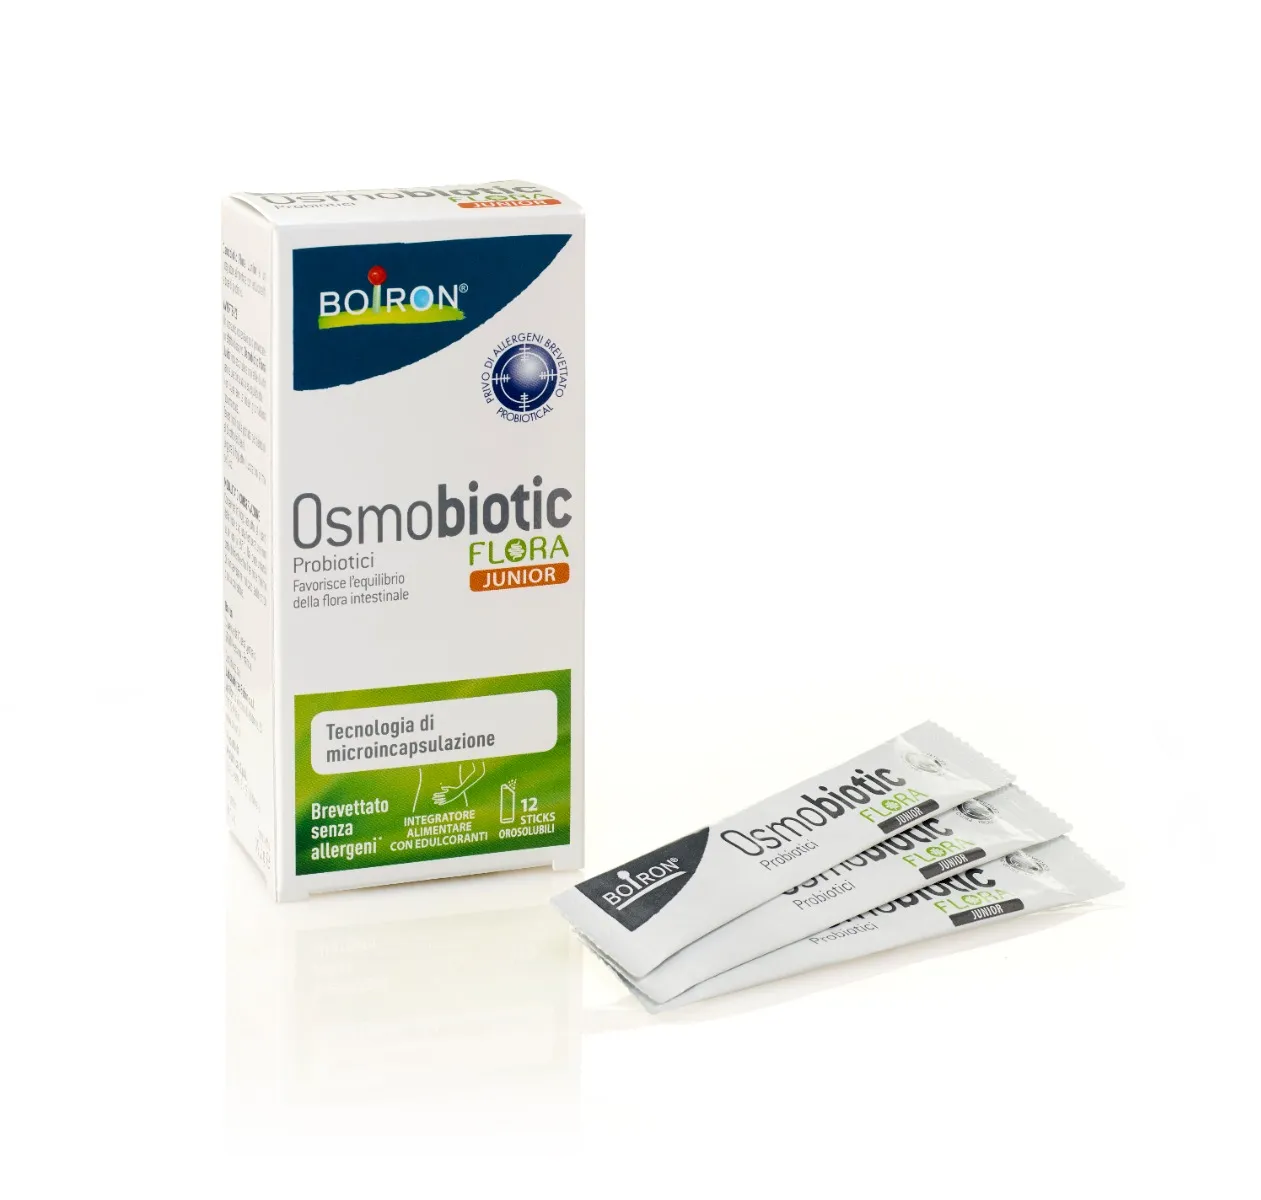 Boiron Osmobiotic Flora Junior Integratore Probiotico 12 Bustine Stick Aroma al Lampone